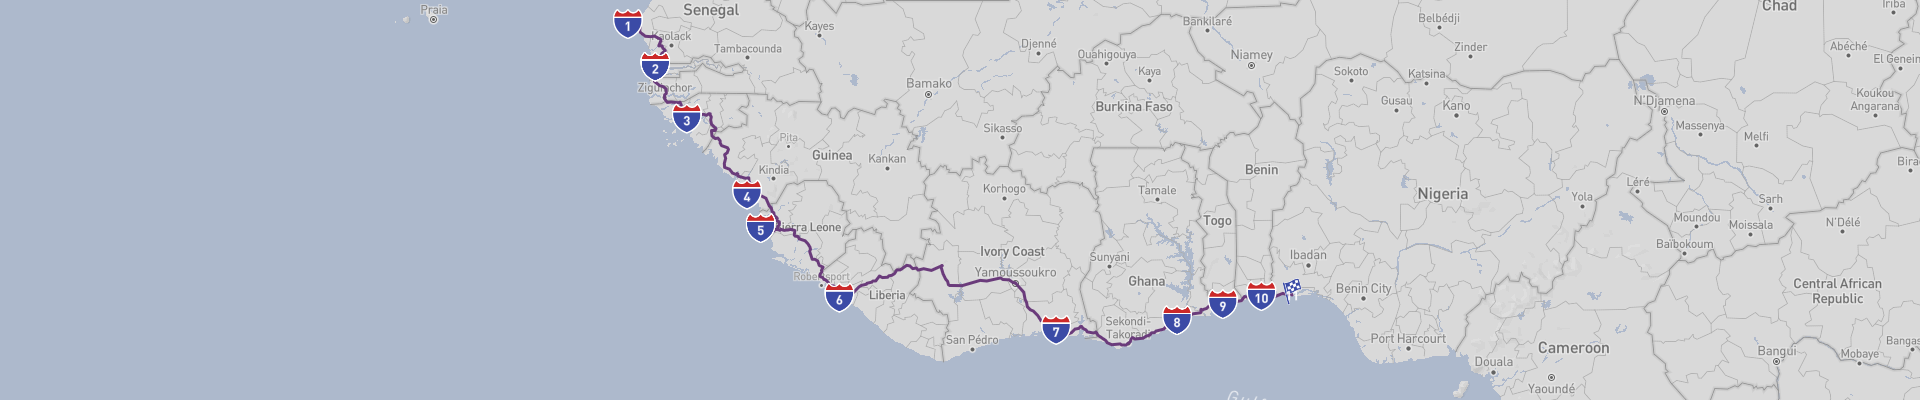 Dakar to Lagos Trans-Africa Road Trip